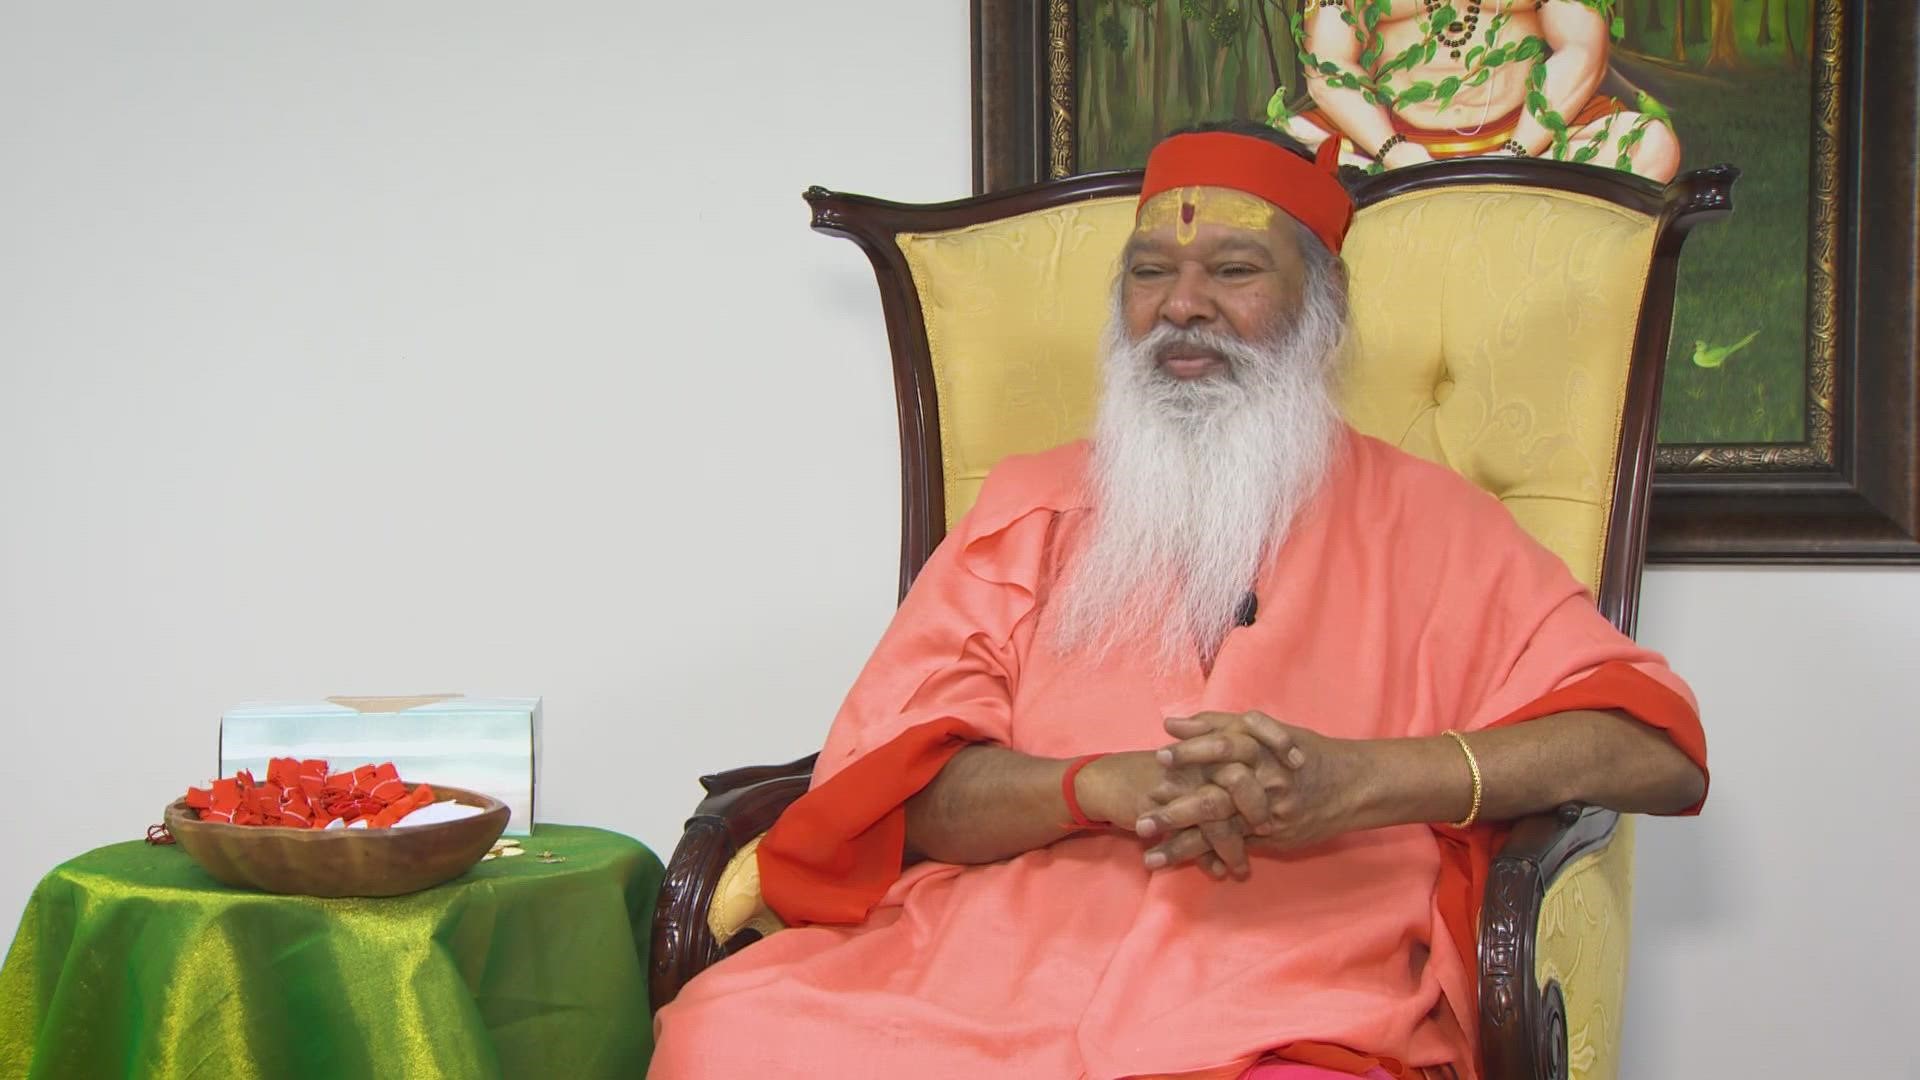 Guru Sri Ganapathy Sachchidananda known as Sri Swamiji, is known for healing people worldwide through his music.